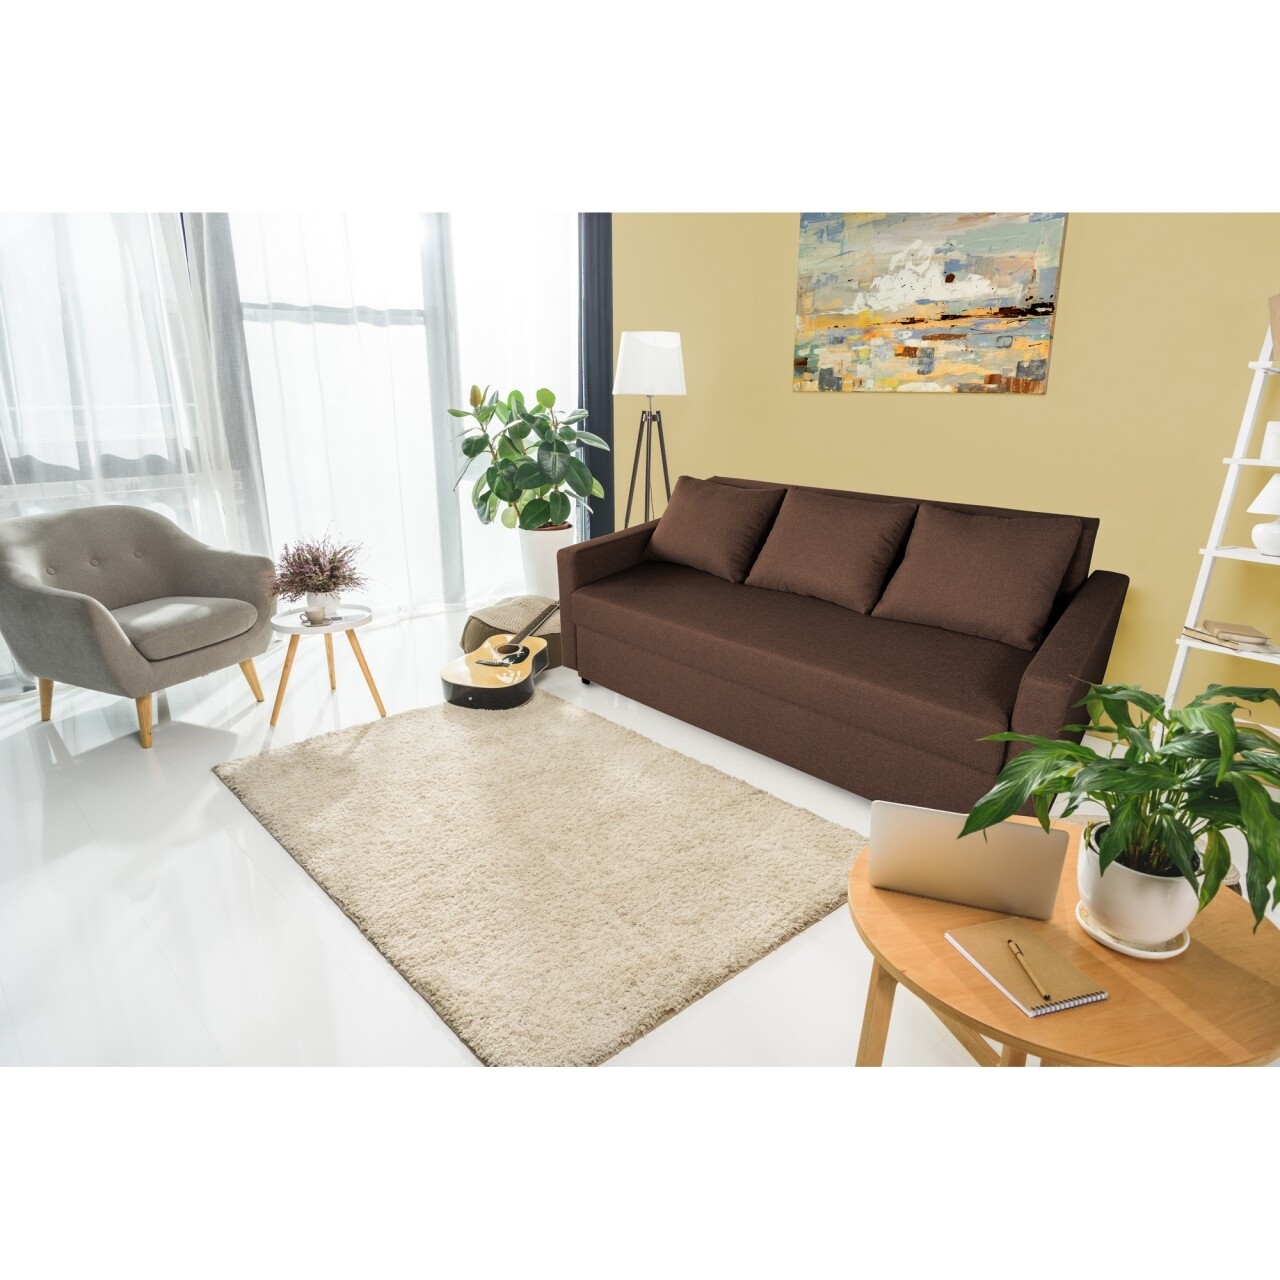 Firenze Kihúzható kanapé Dark Chocolate 218x85x85cm + tárolóládával, barna